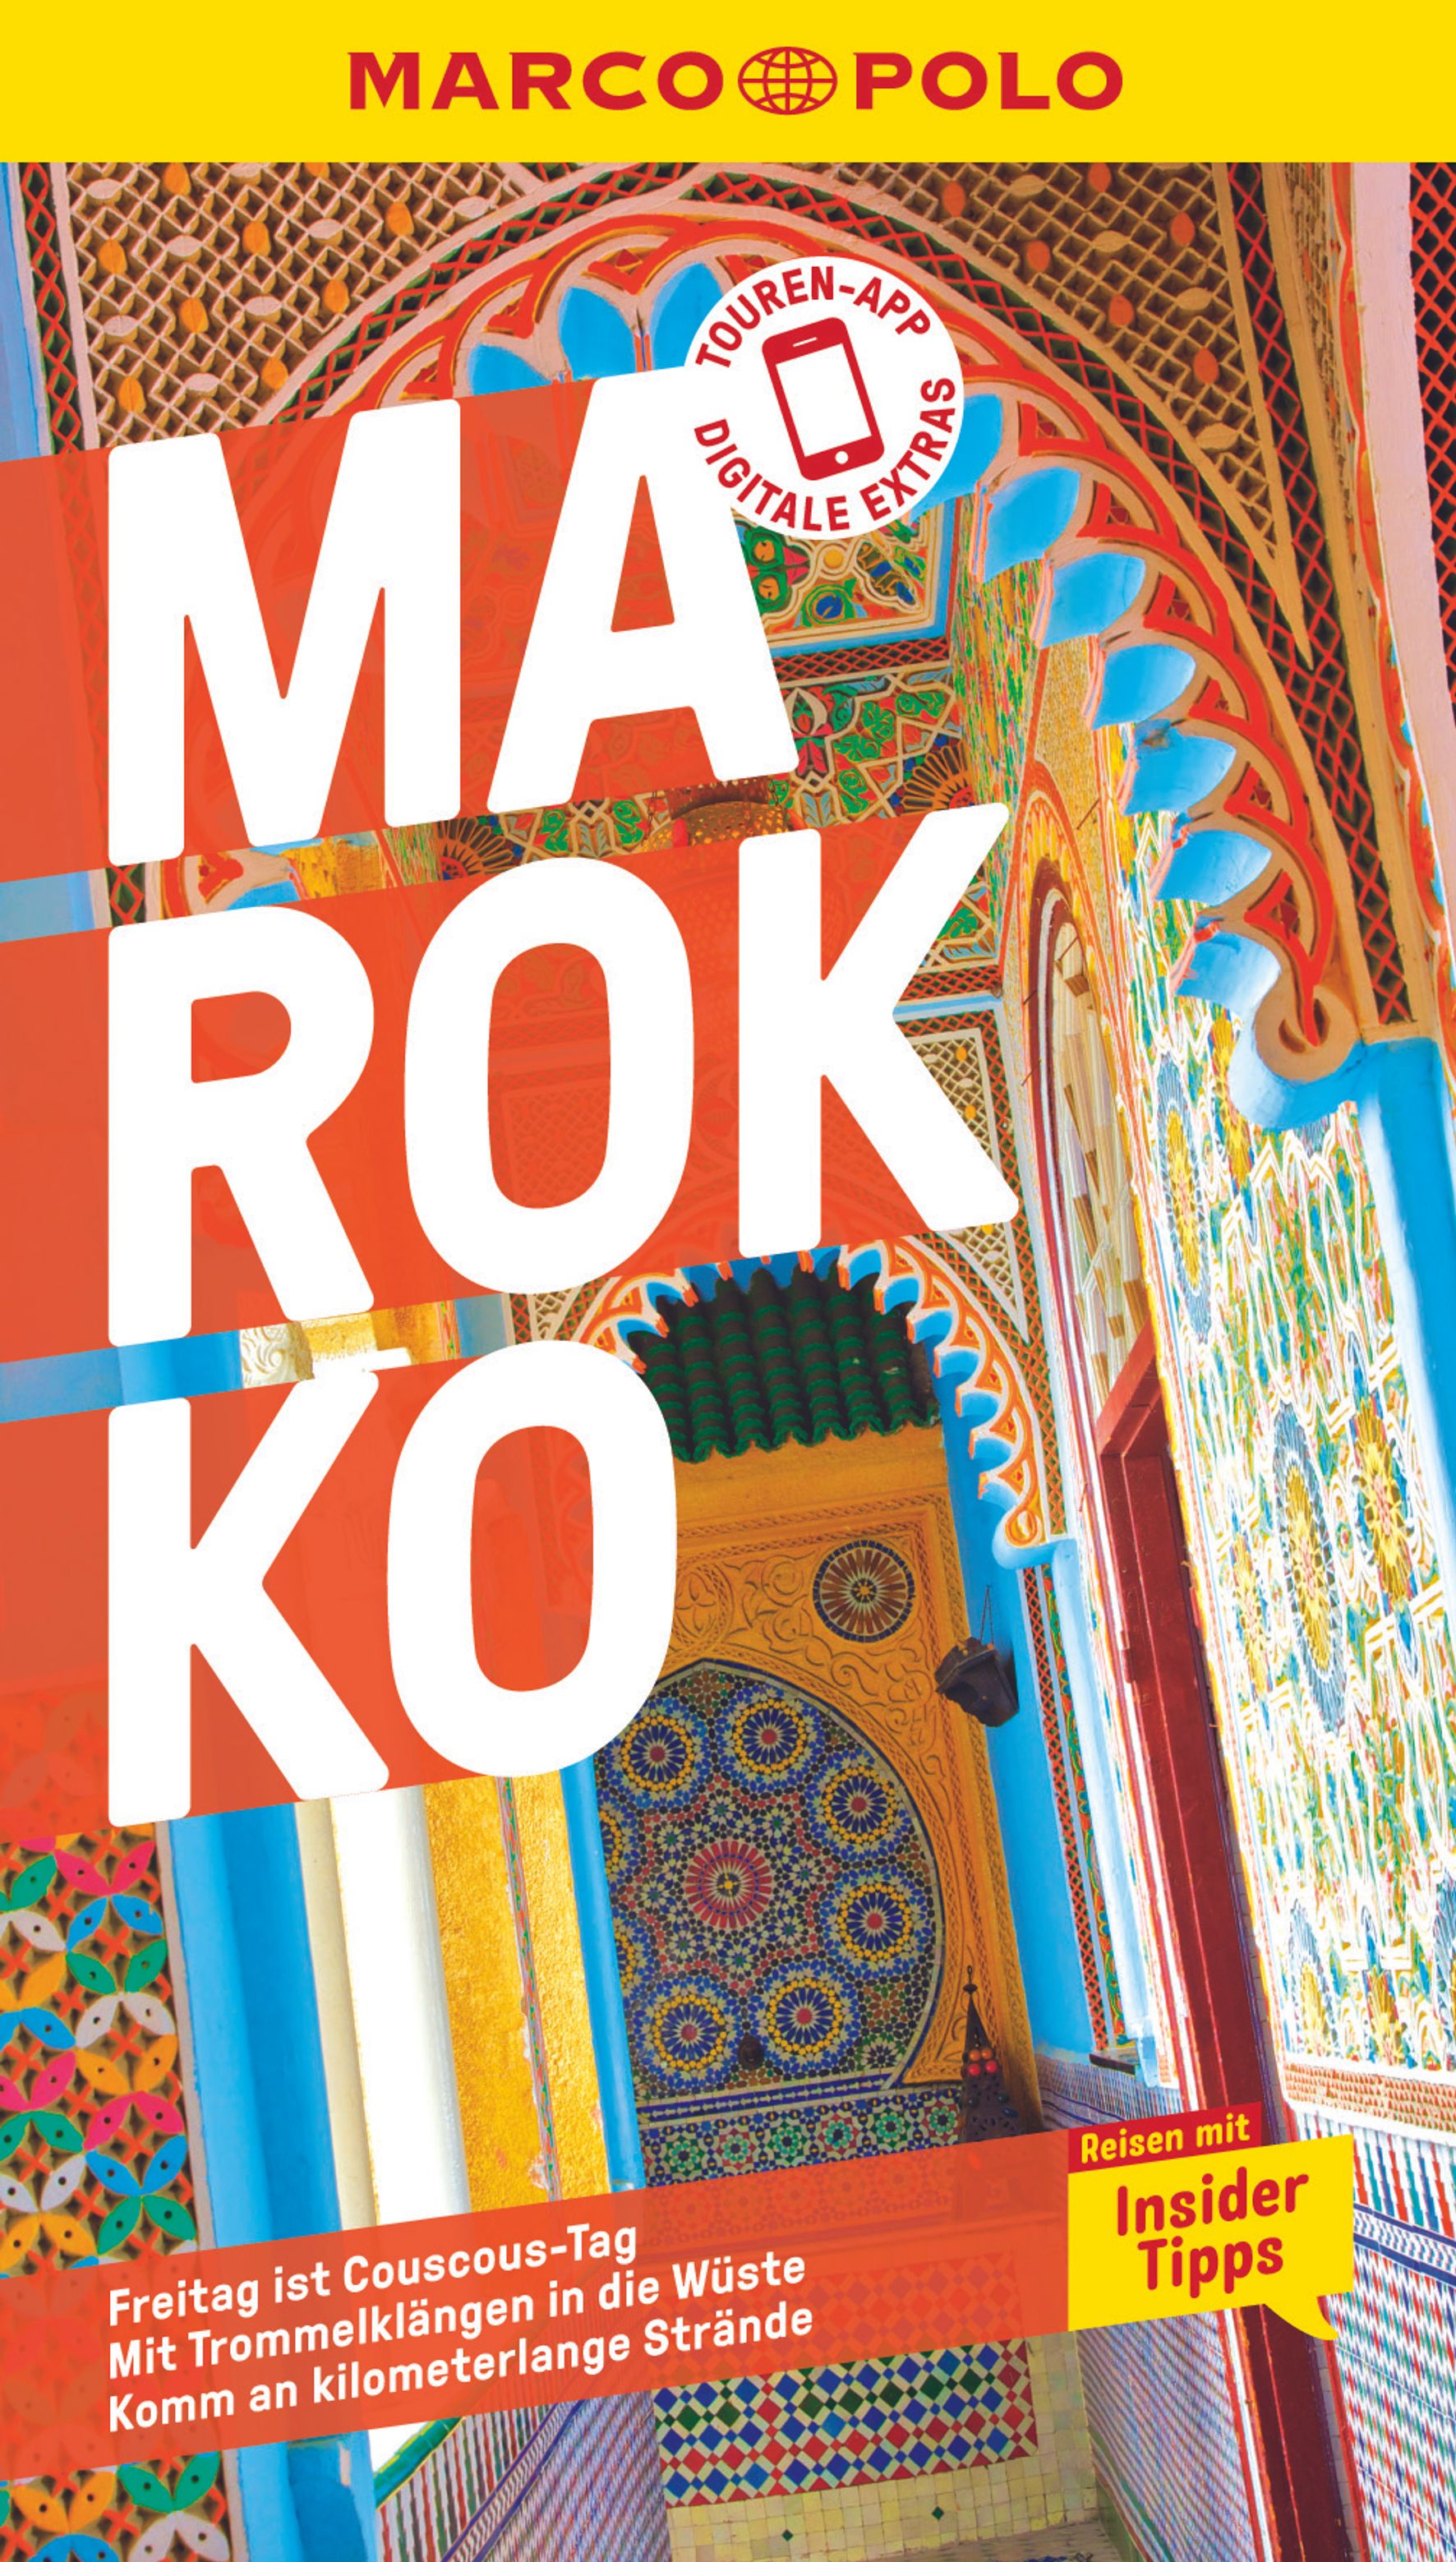 MAIRDUMONT Marokko (eBook)